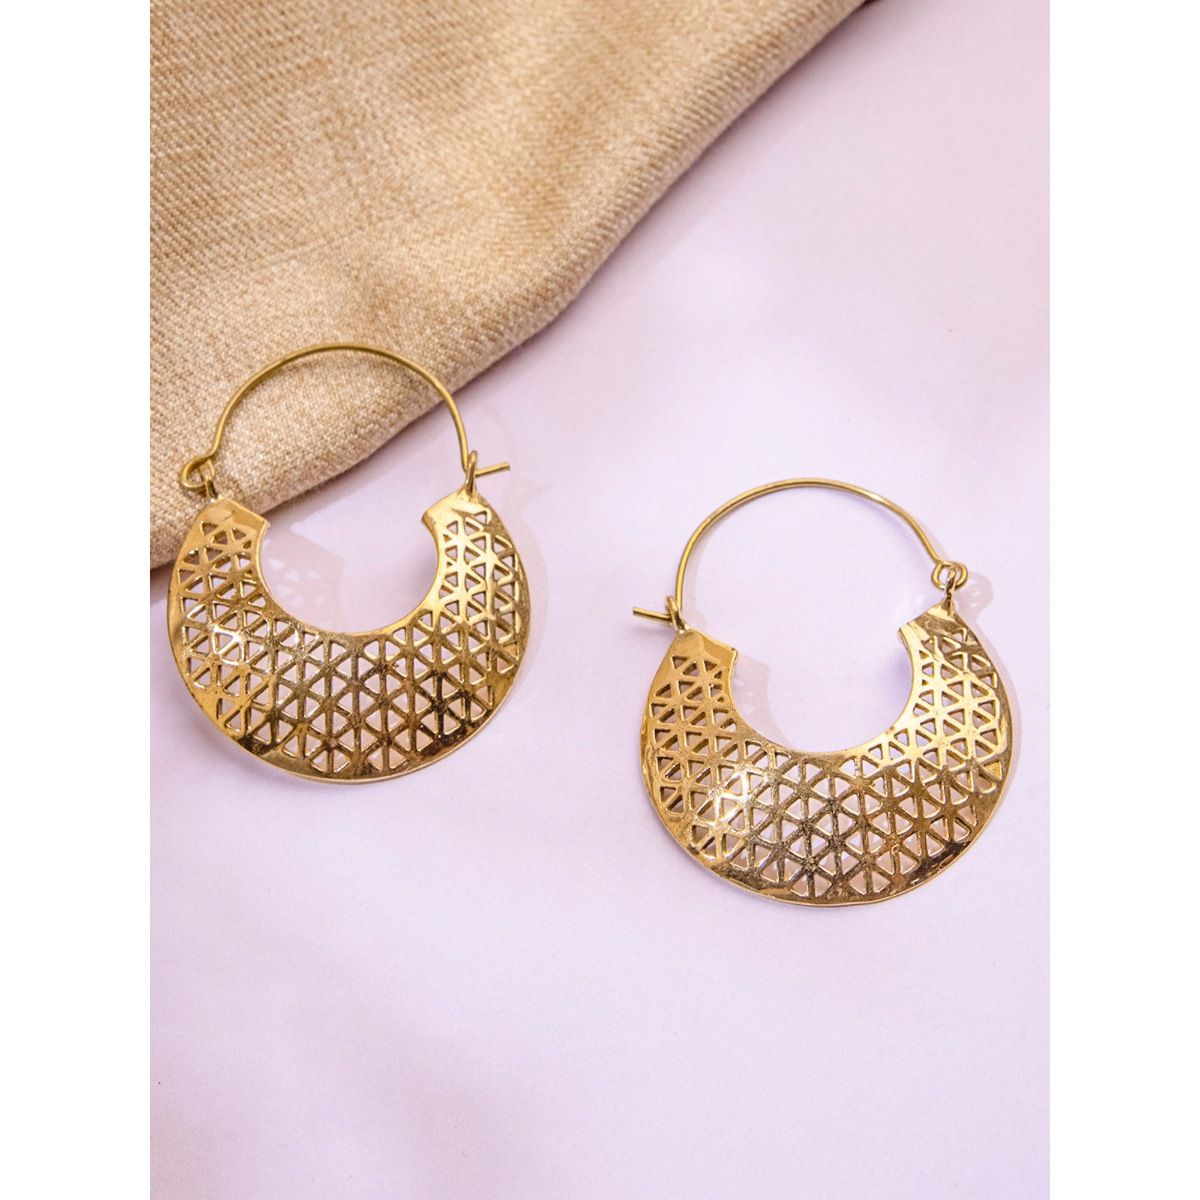 Buy Attractive Gold Earring Design Ruby Stone One Gram Gold Hoop Earrings  Online